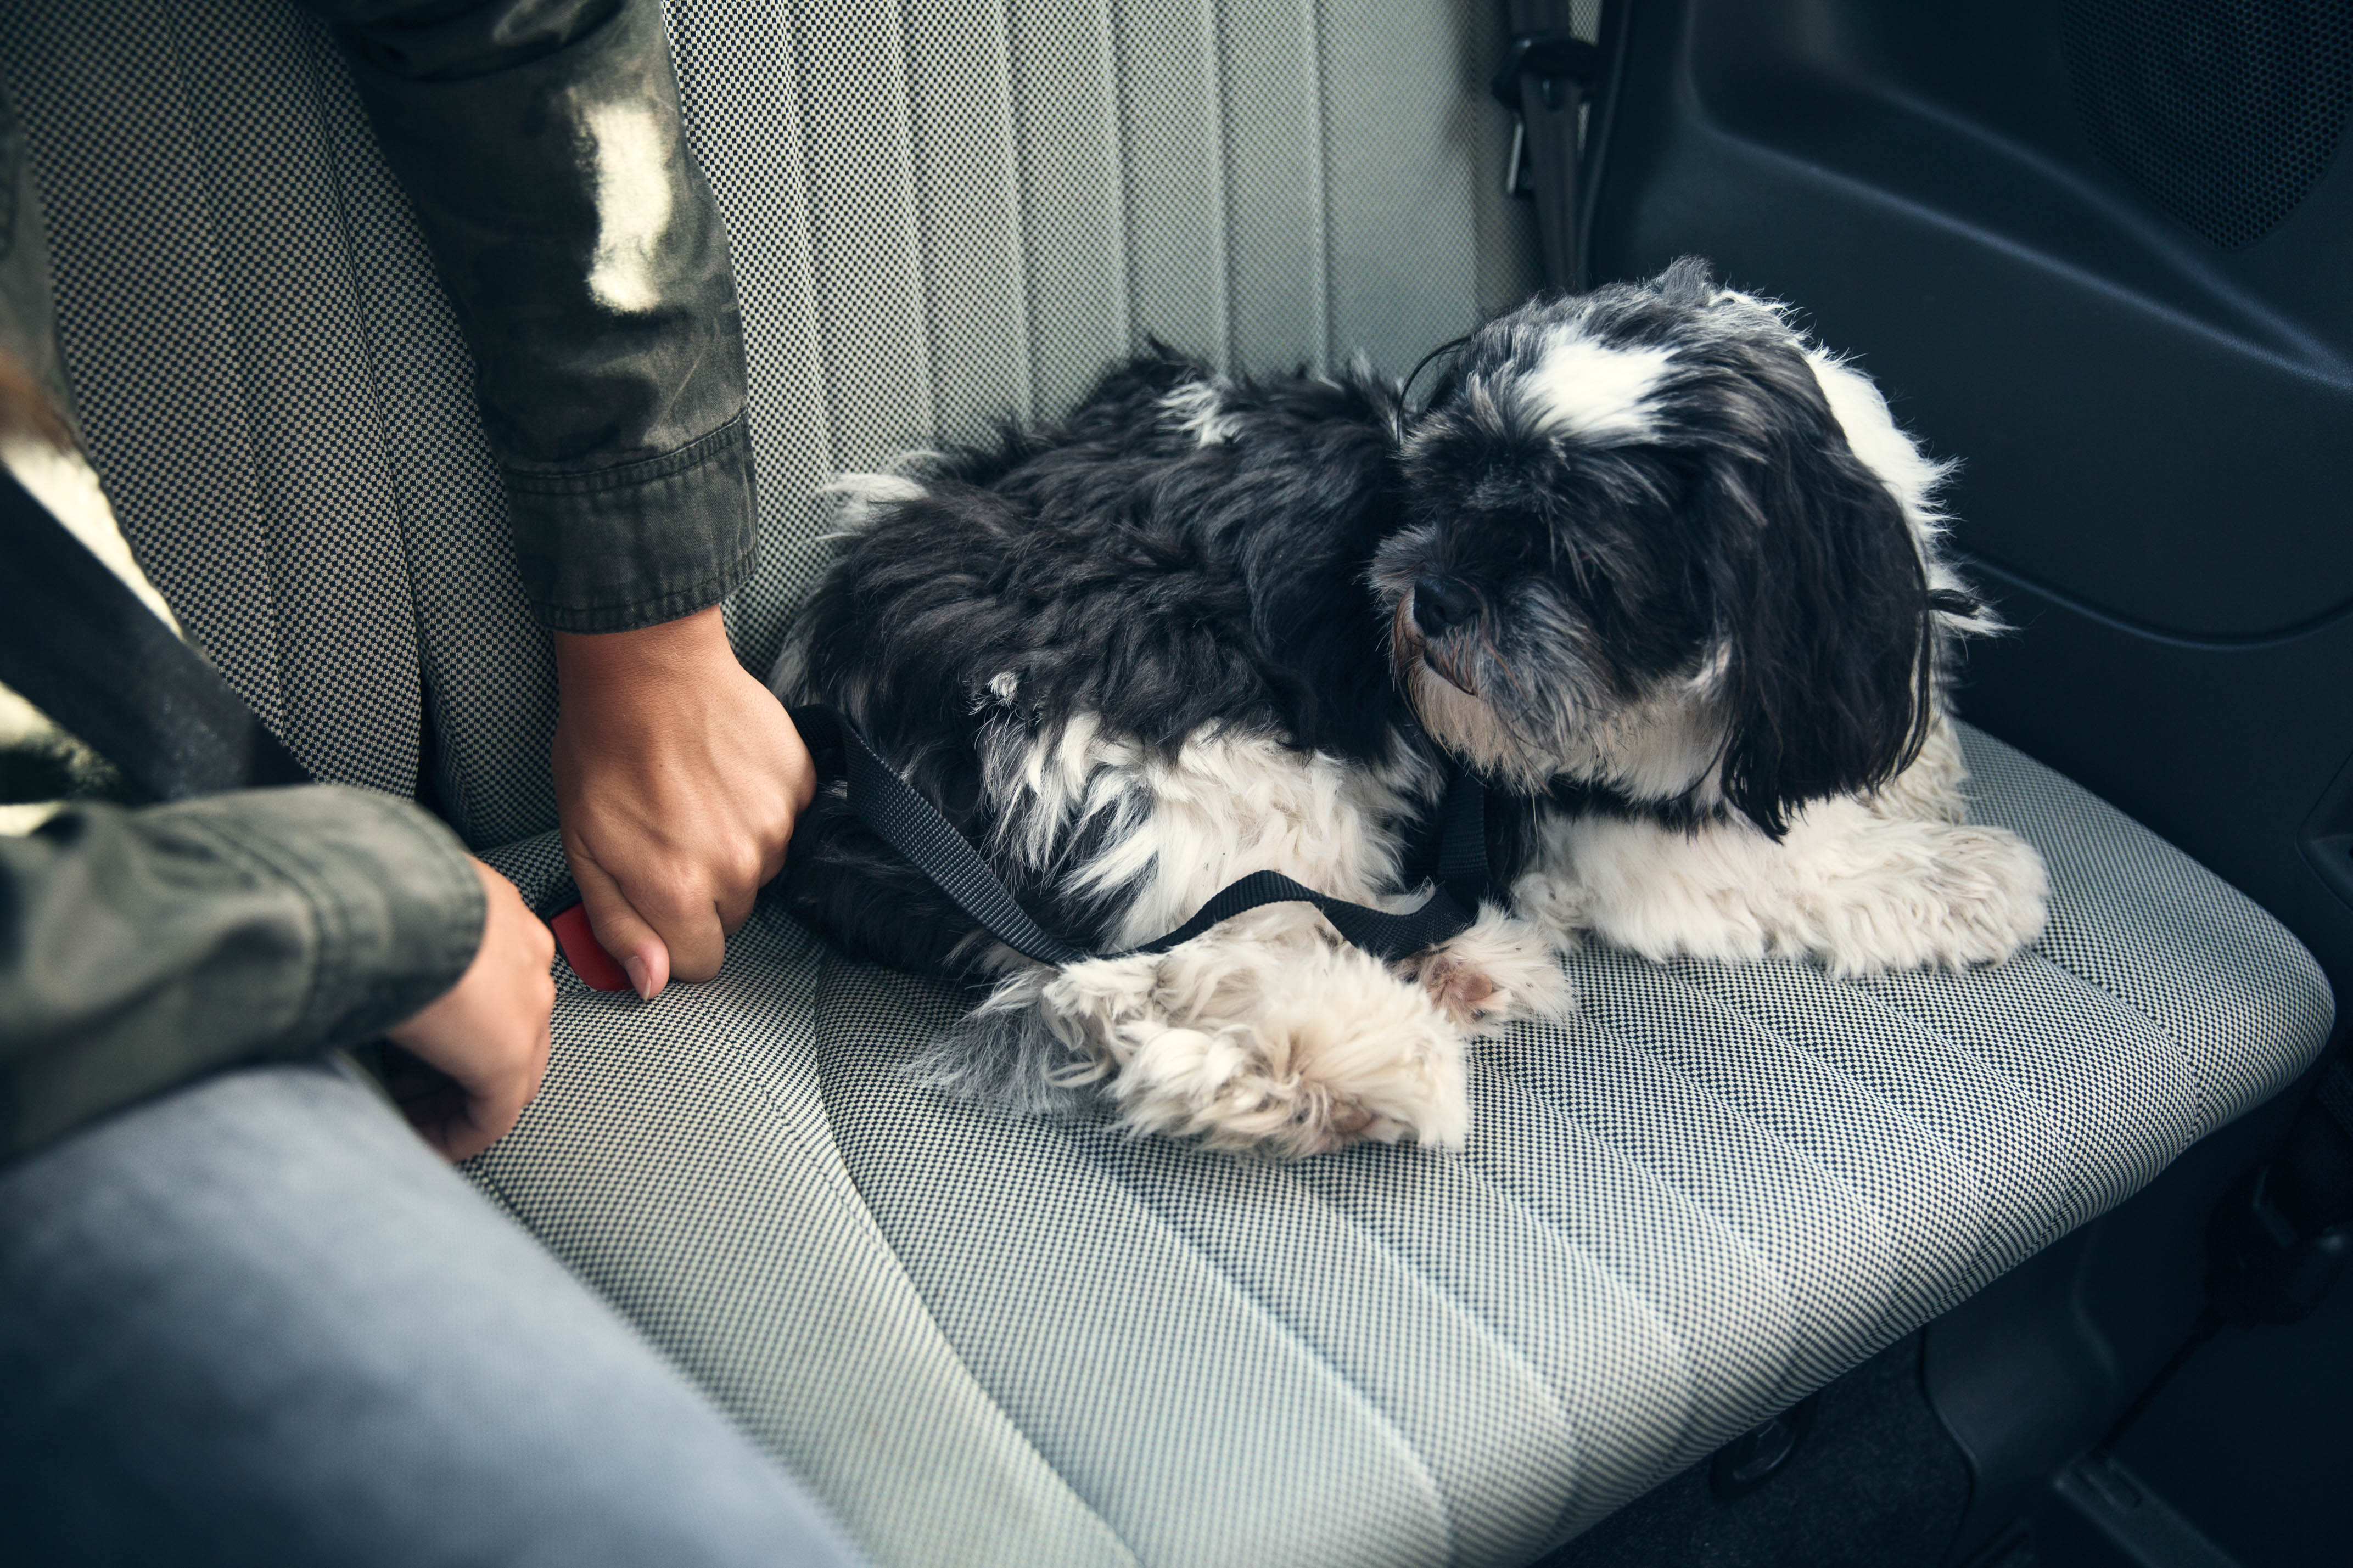 prototype mandat At deaktivere Se her tips til, når du transporterer kæledyr i bilen | FDM